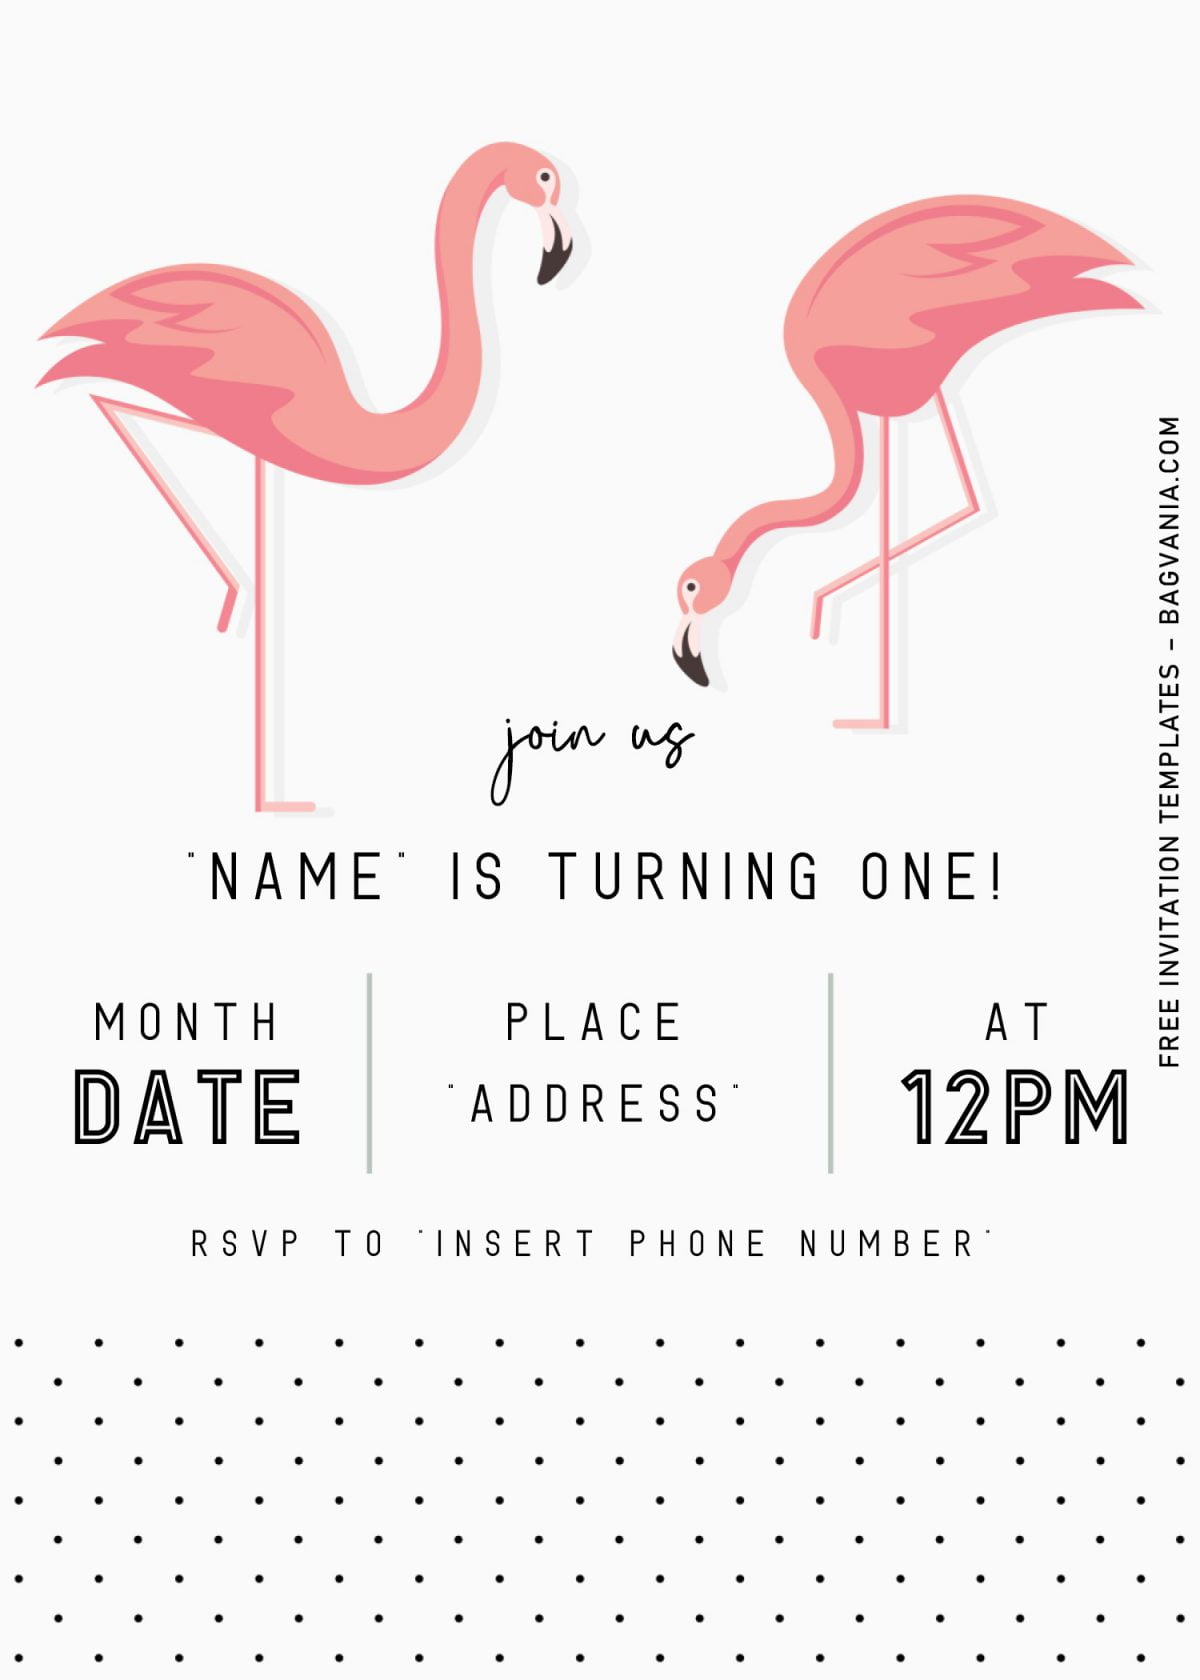 Flamingo Birthday Invitation Templates - Editable With Microsoft Word and has portrait orientation